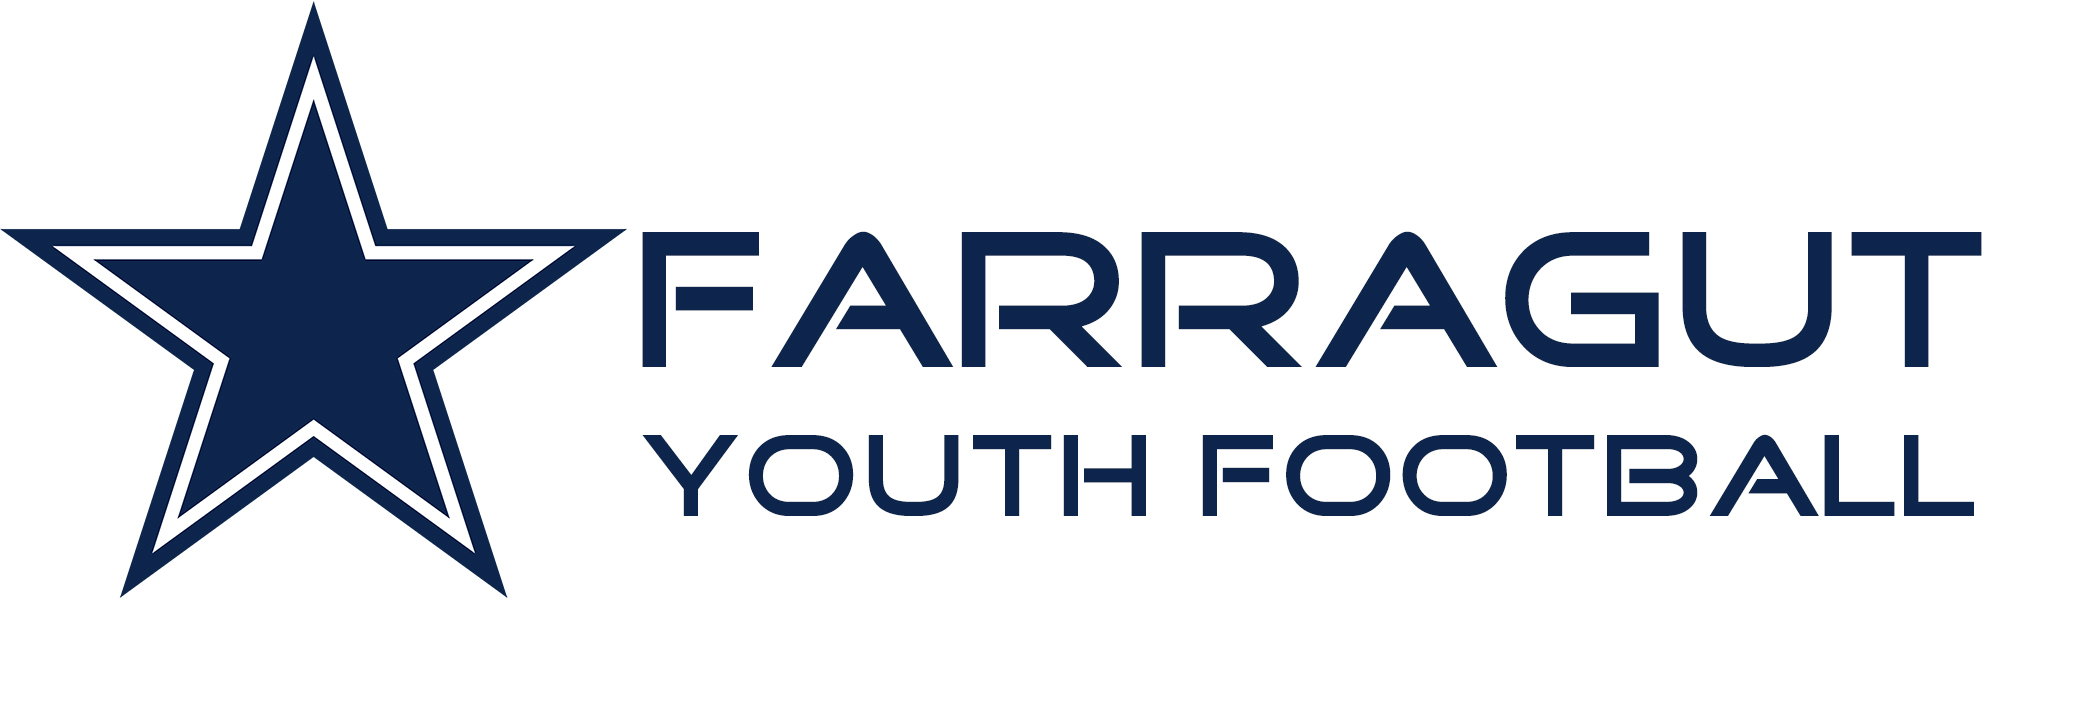 Farragut Youth Football